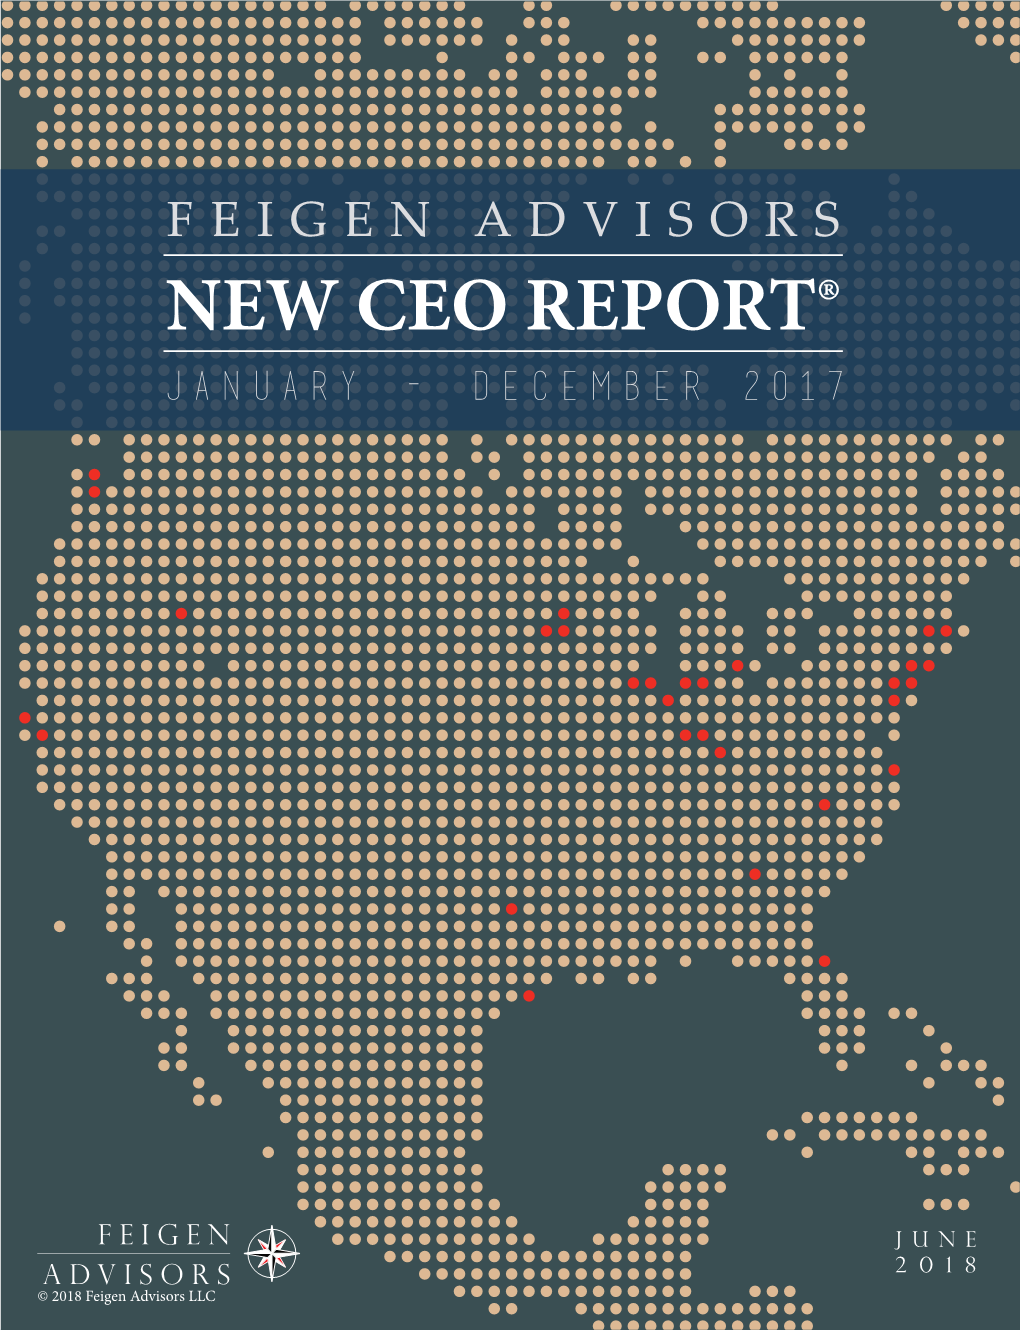 The 2017 Feigen Advisors New CEO Report